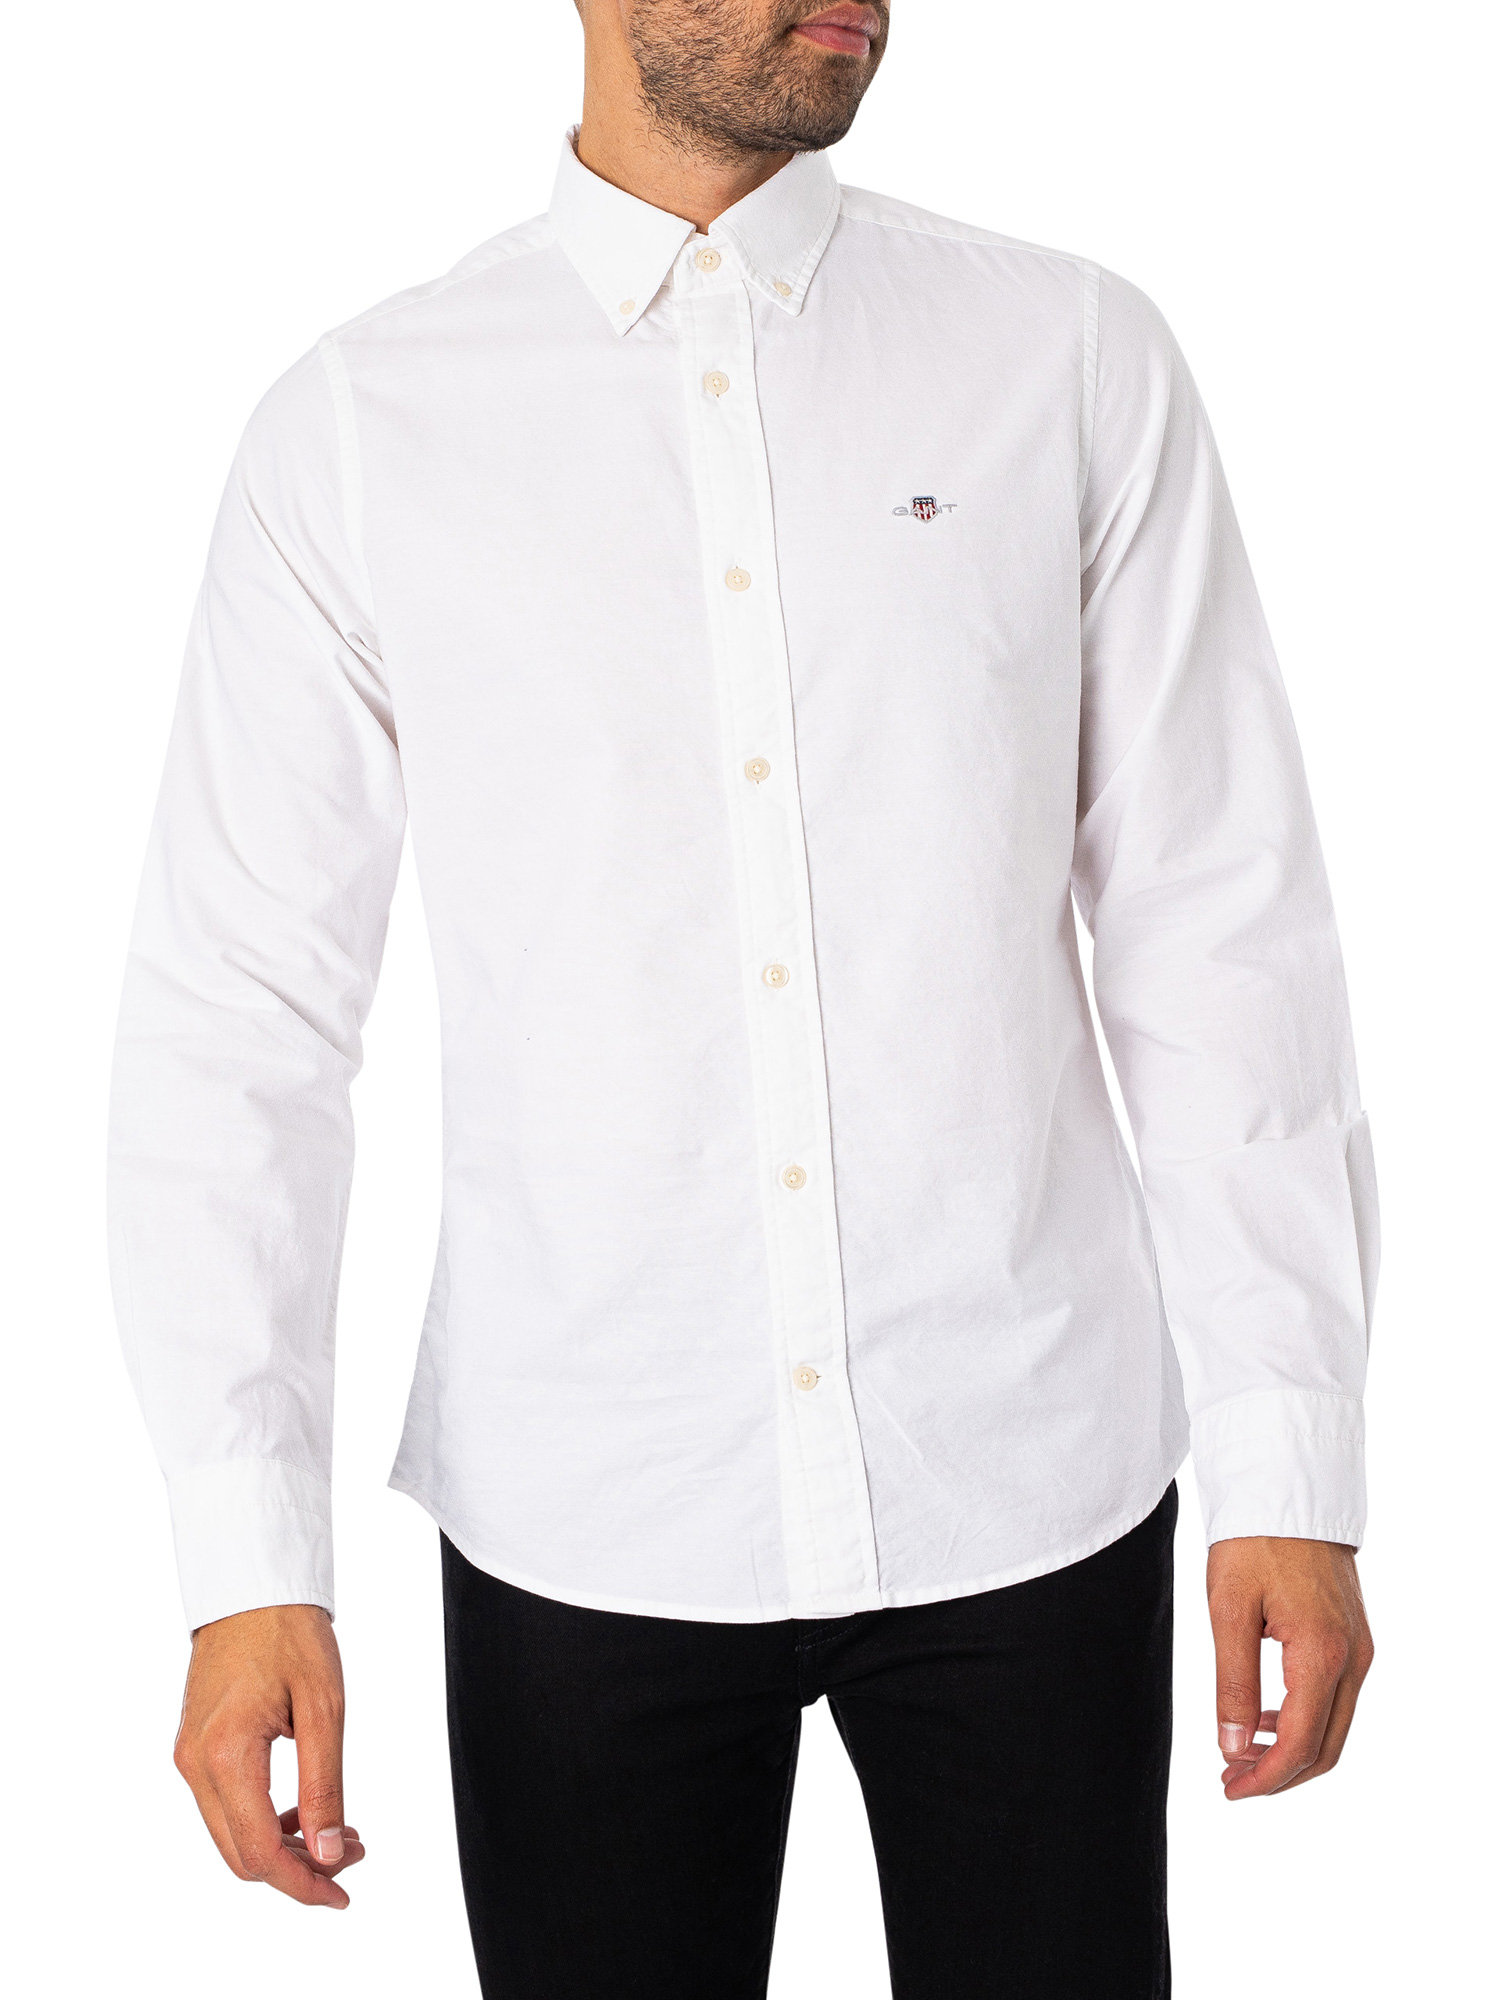 GANT Slim | Fit - Standout Shirt White Oxford